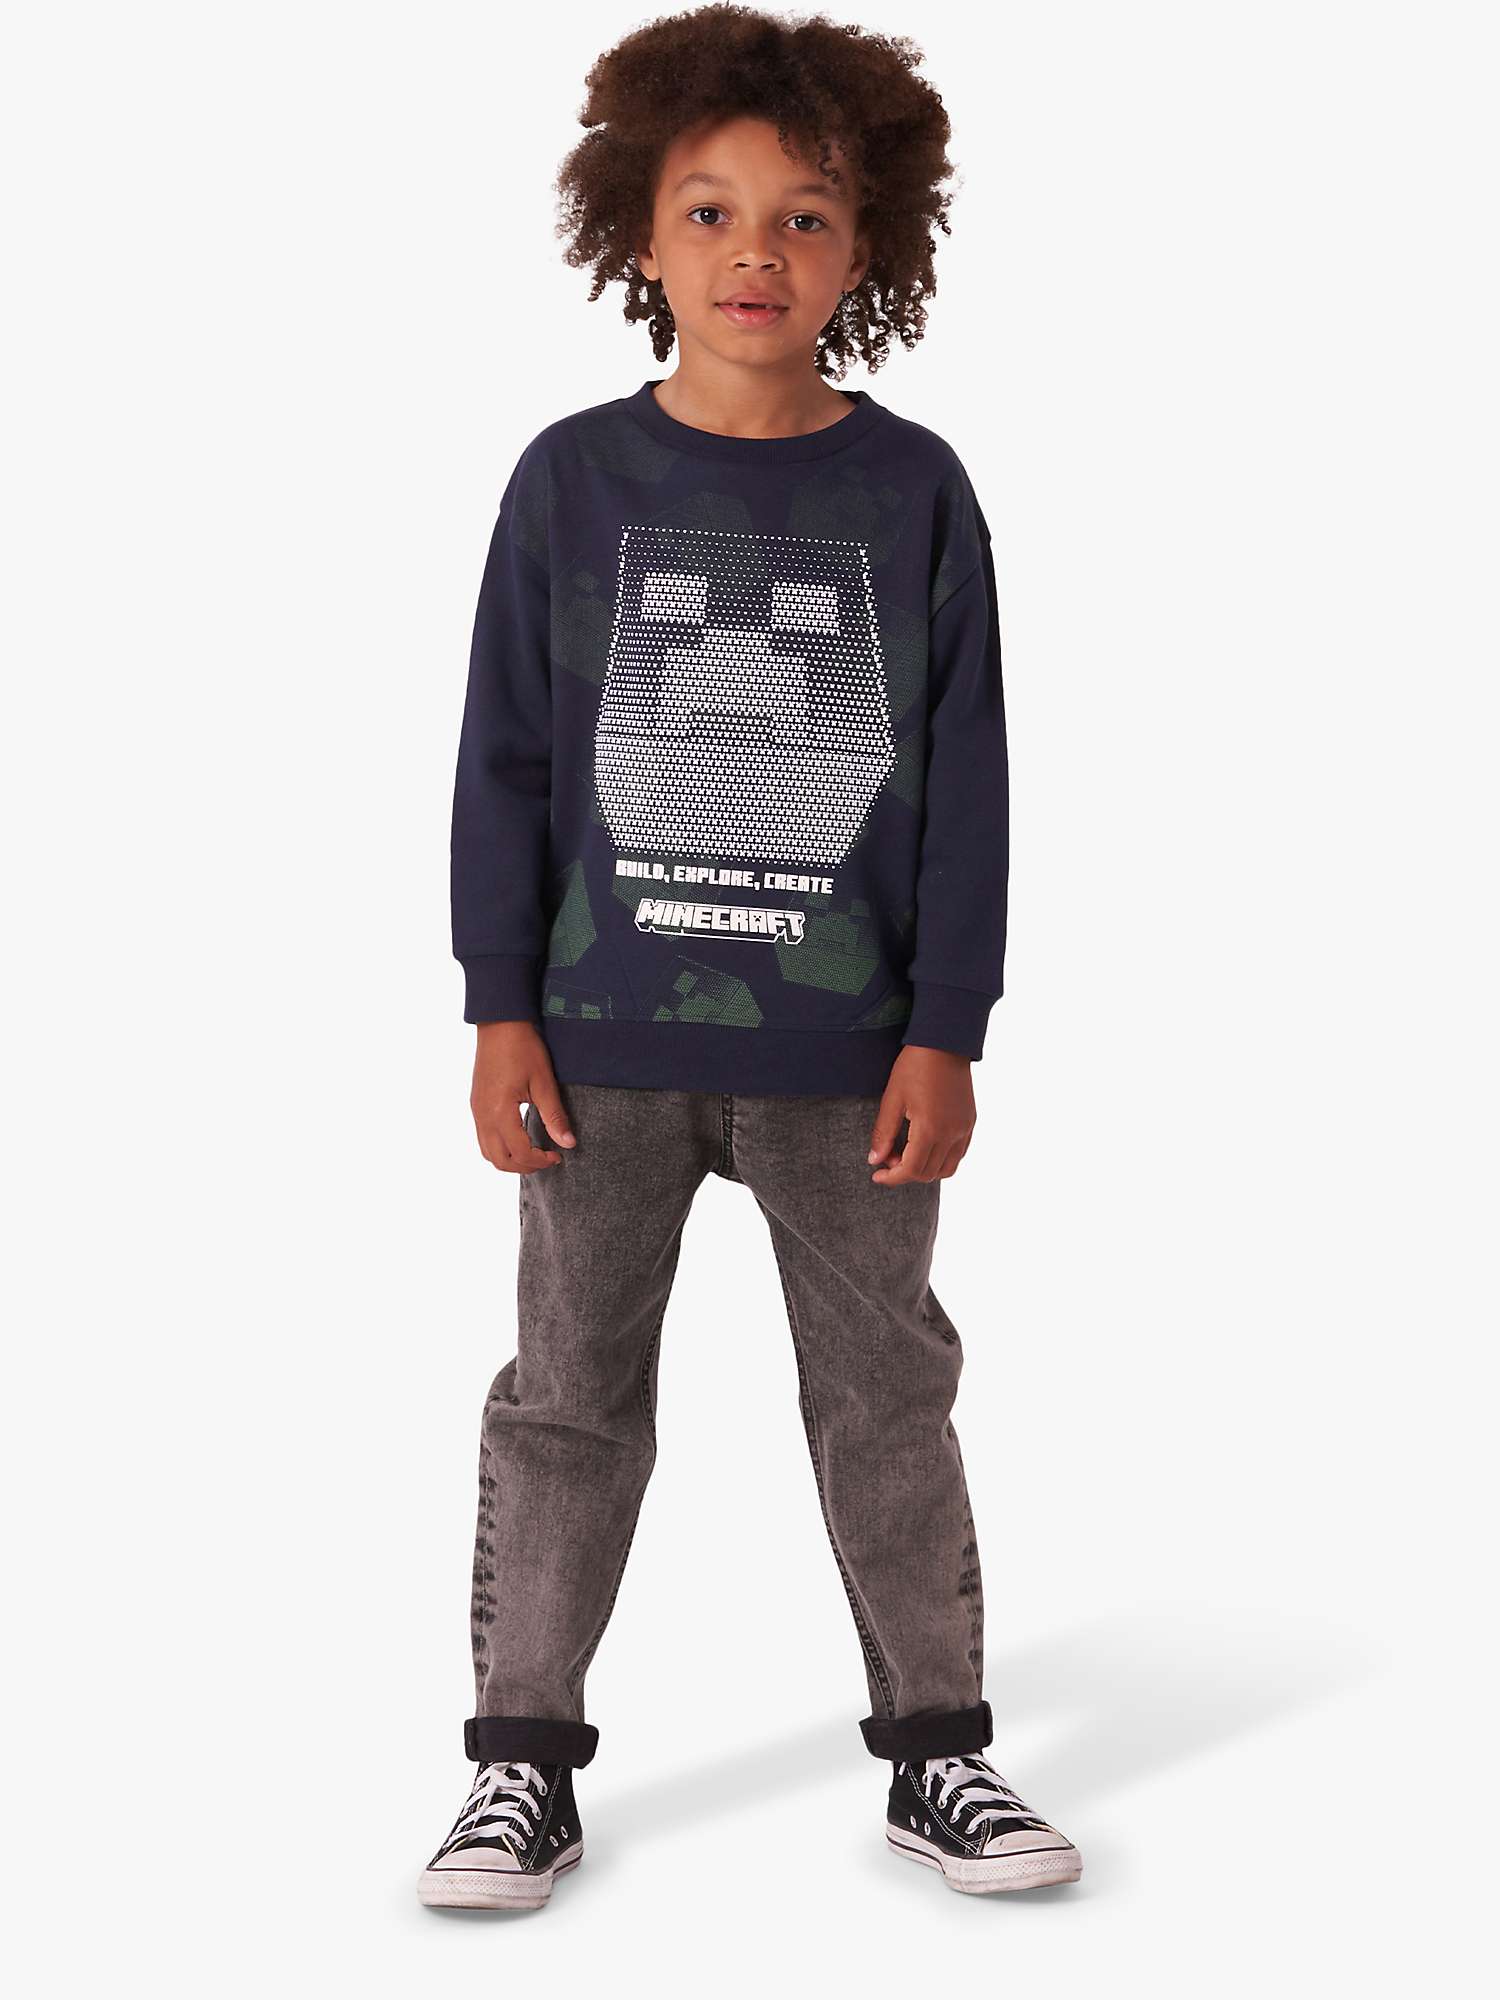 Buy Angel & Rocket Kids' Minecraft Sweatshirt, Navy Online at johnlewis.com